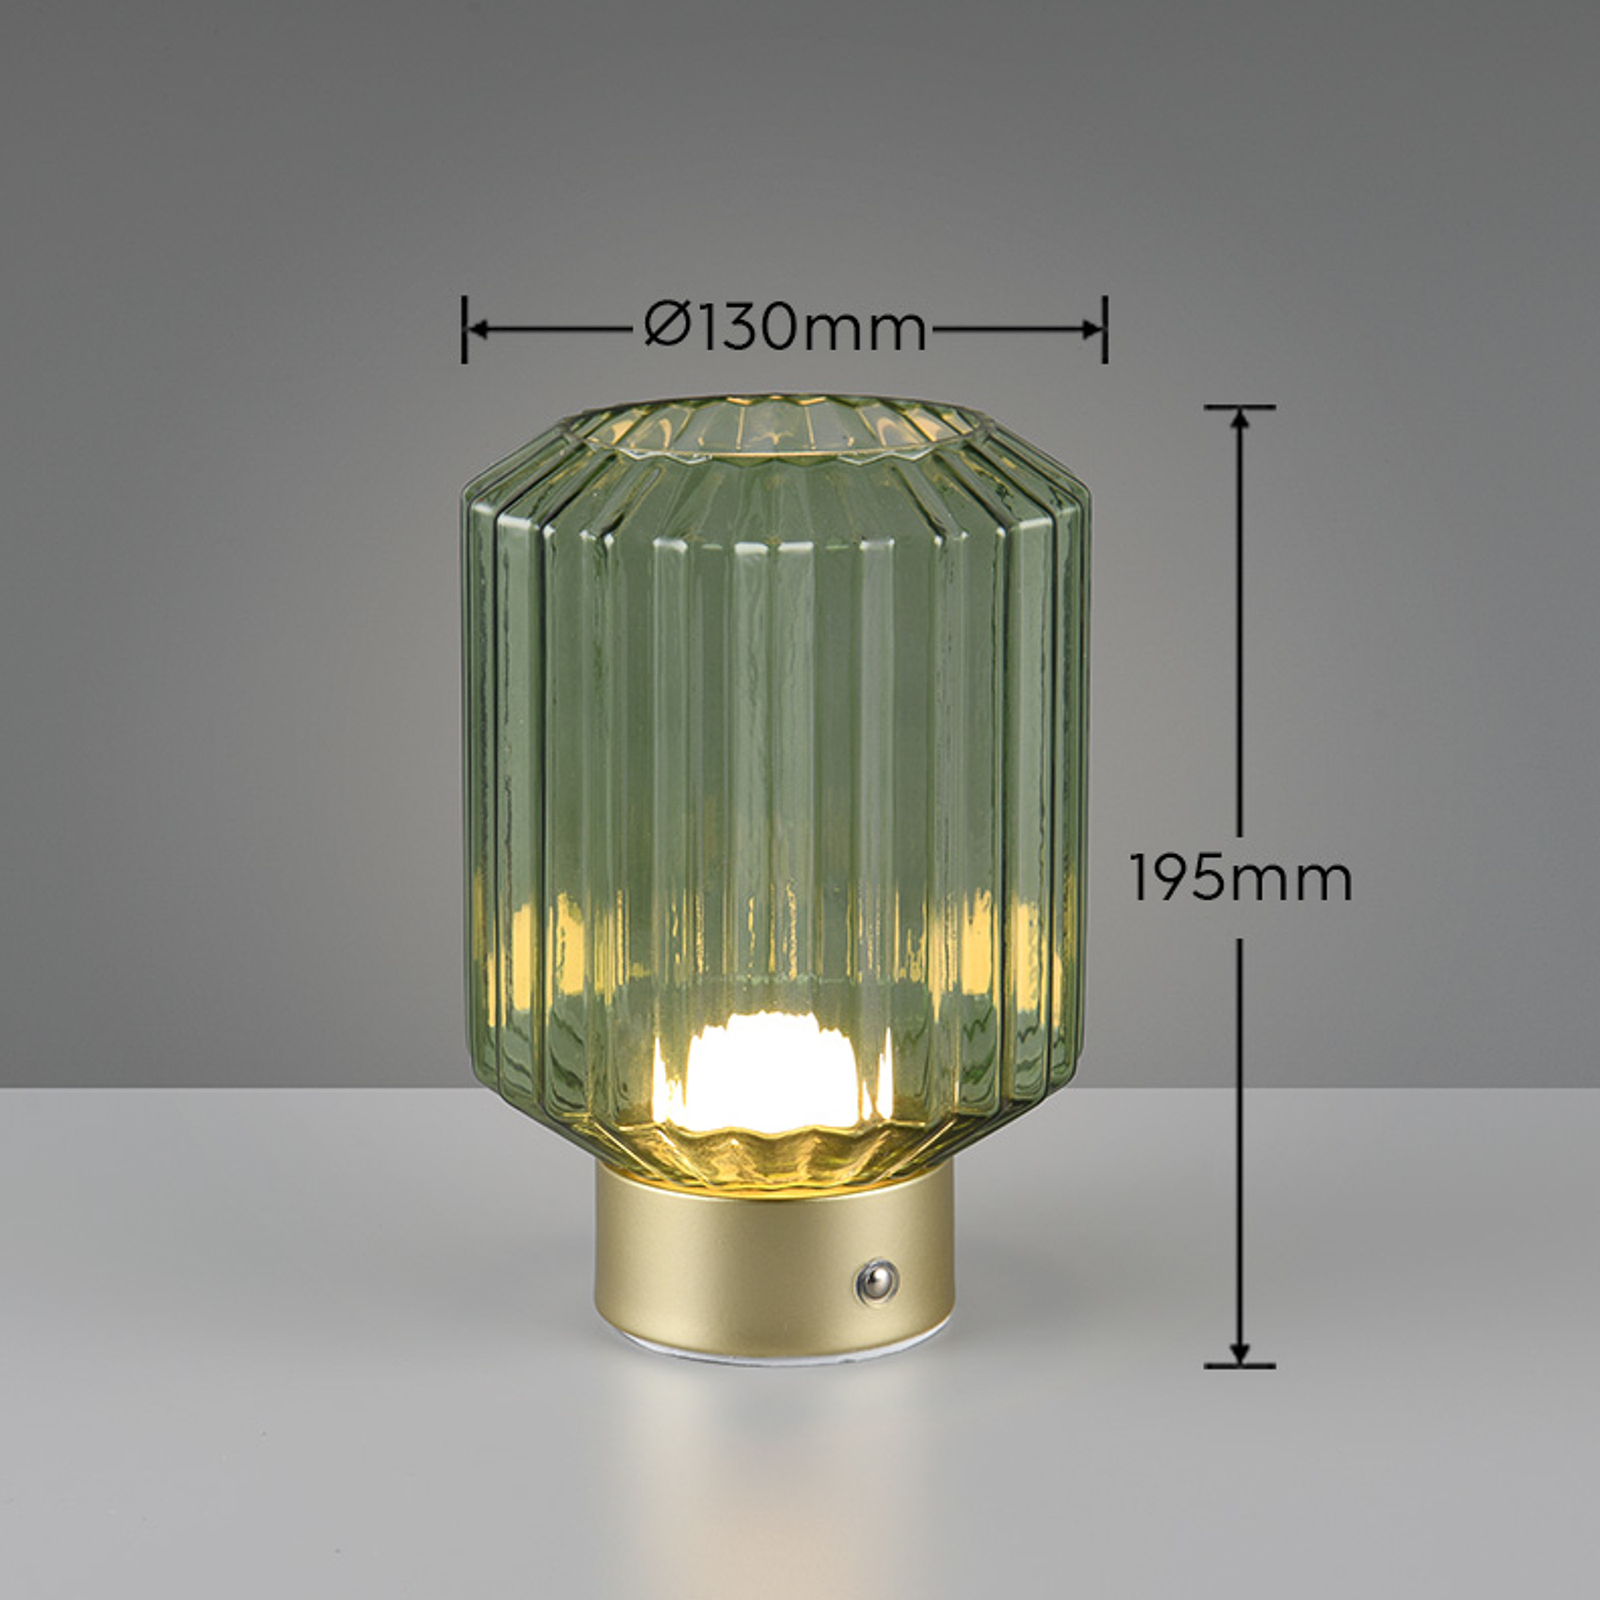 Lord lámpara de mesa LED recargable, latón/verde, altura 19,5 cm, cristal